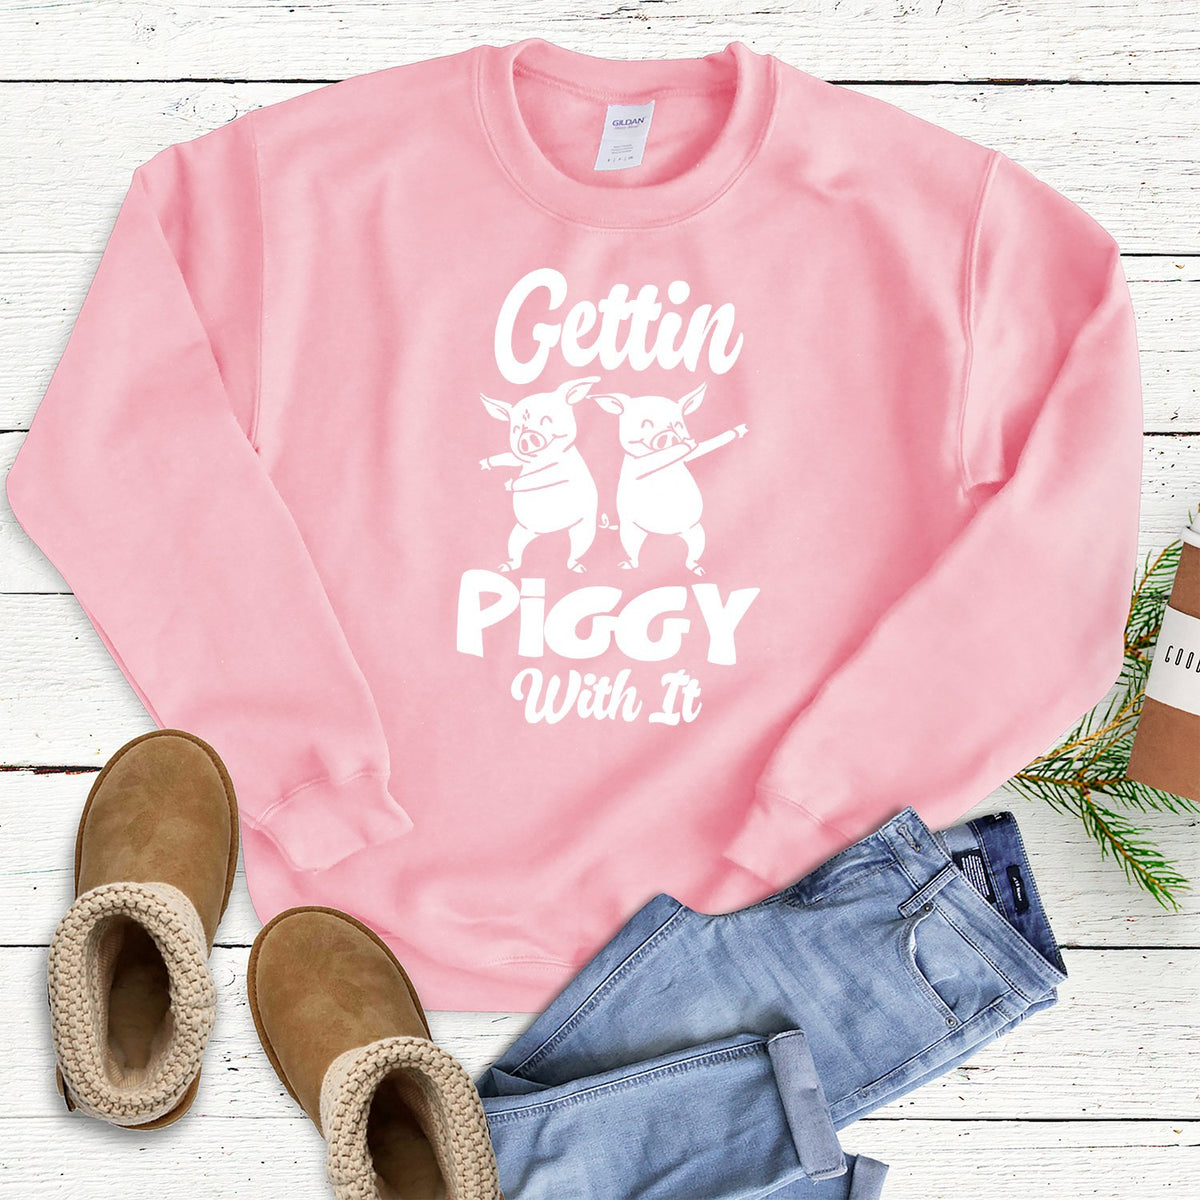 Gettin Piggy With It - Long Sleeve Heavy Crewneck Sweatshirt